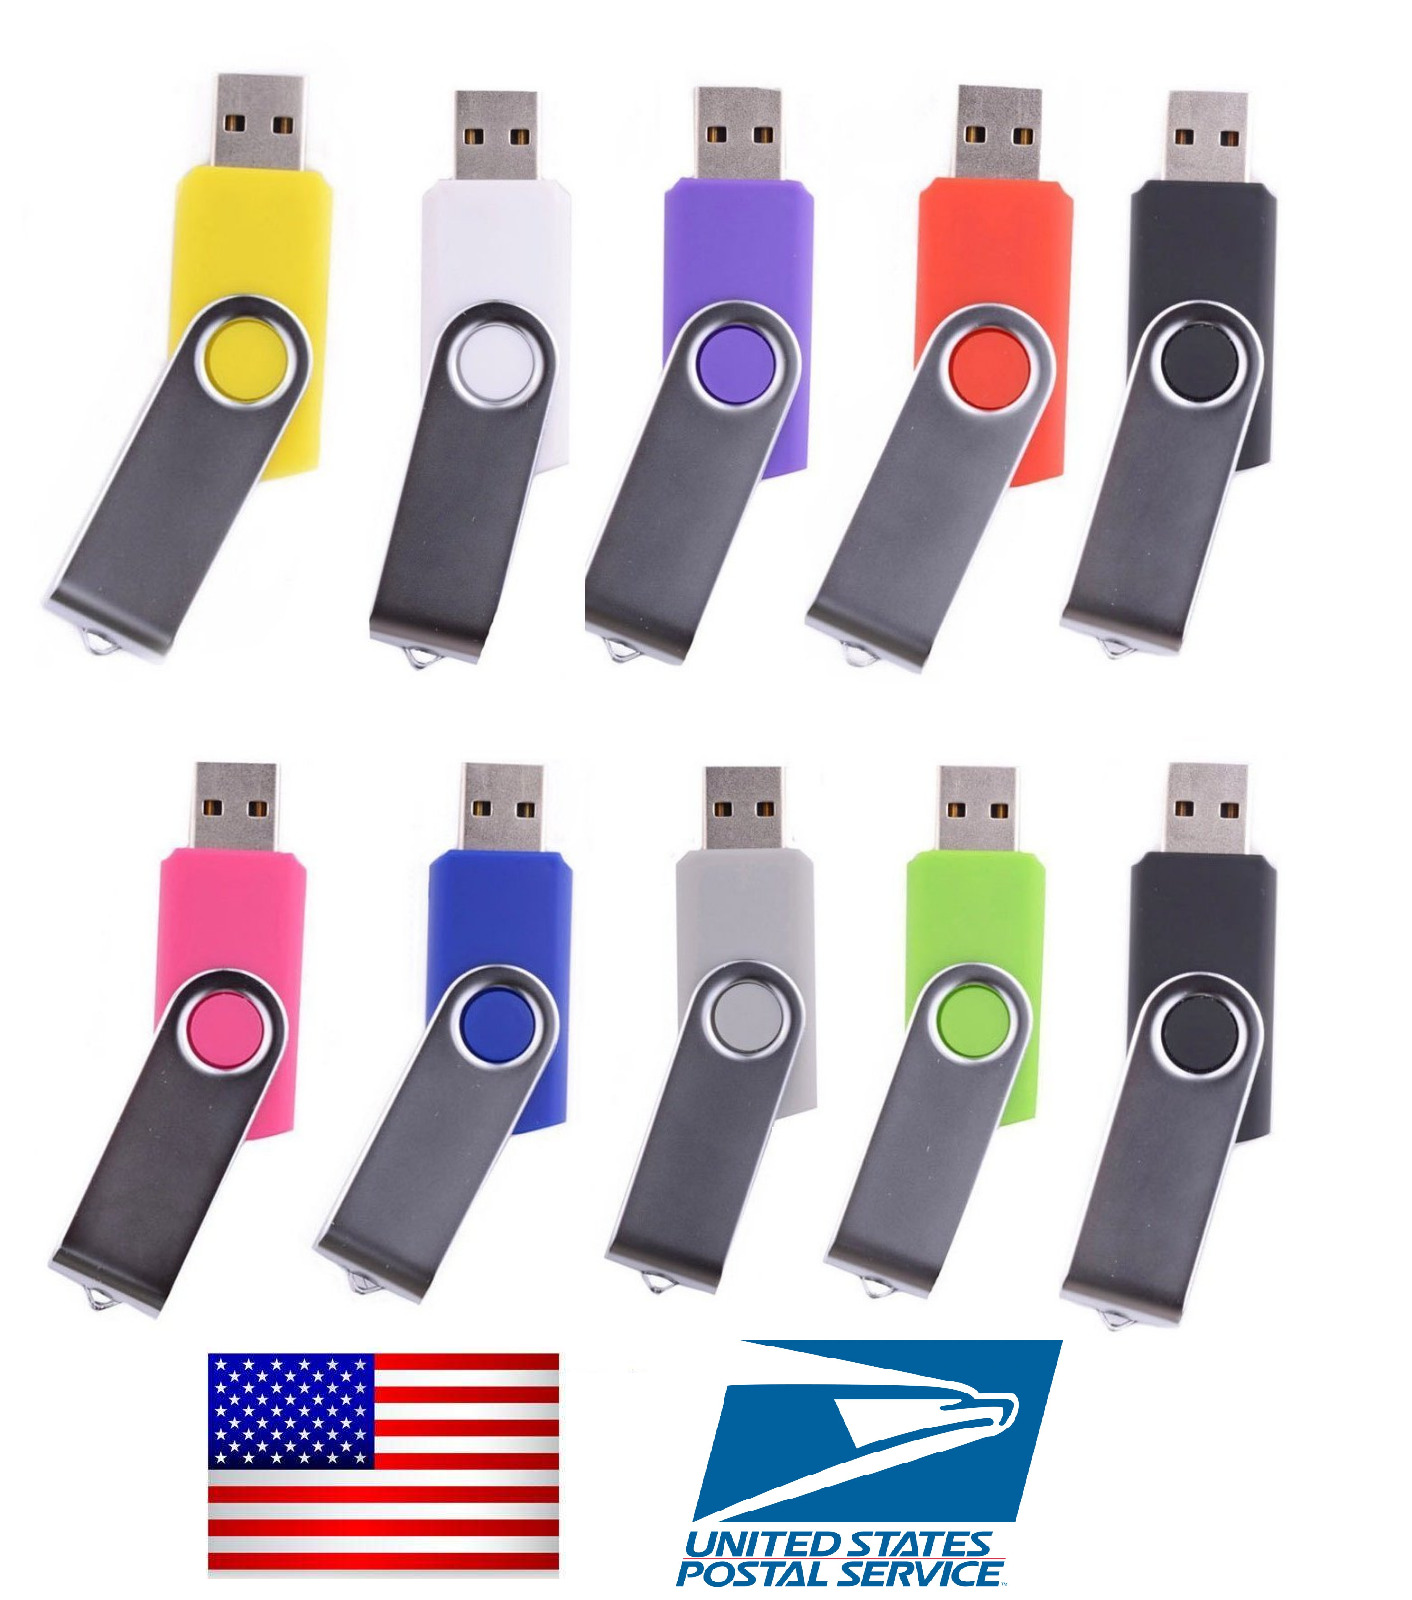 wholesale/lot/bulk ( 10 PACK ) usb flash drive thumb storage jump Disk pen stick